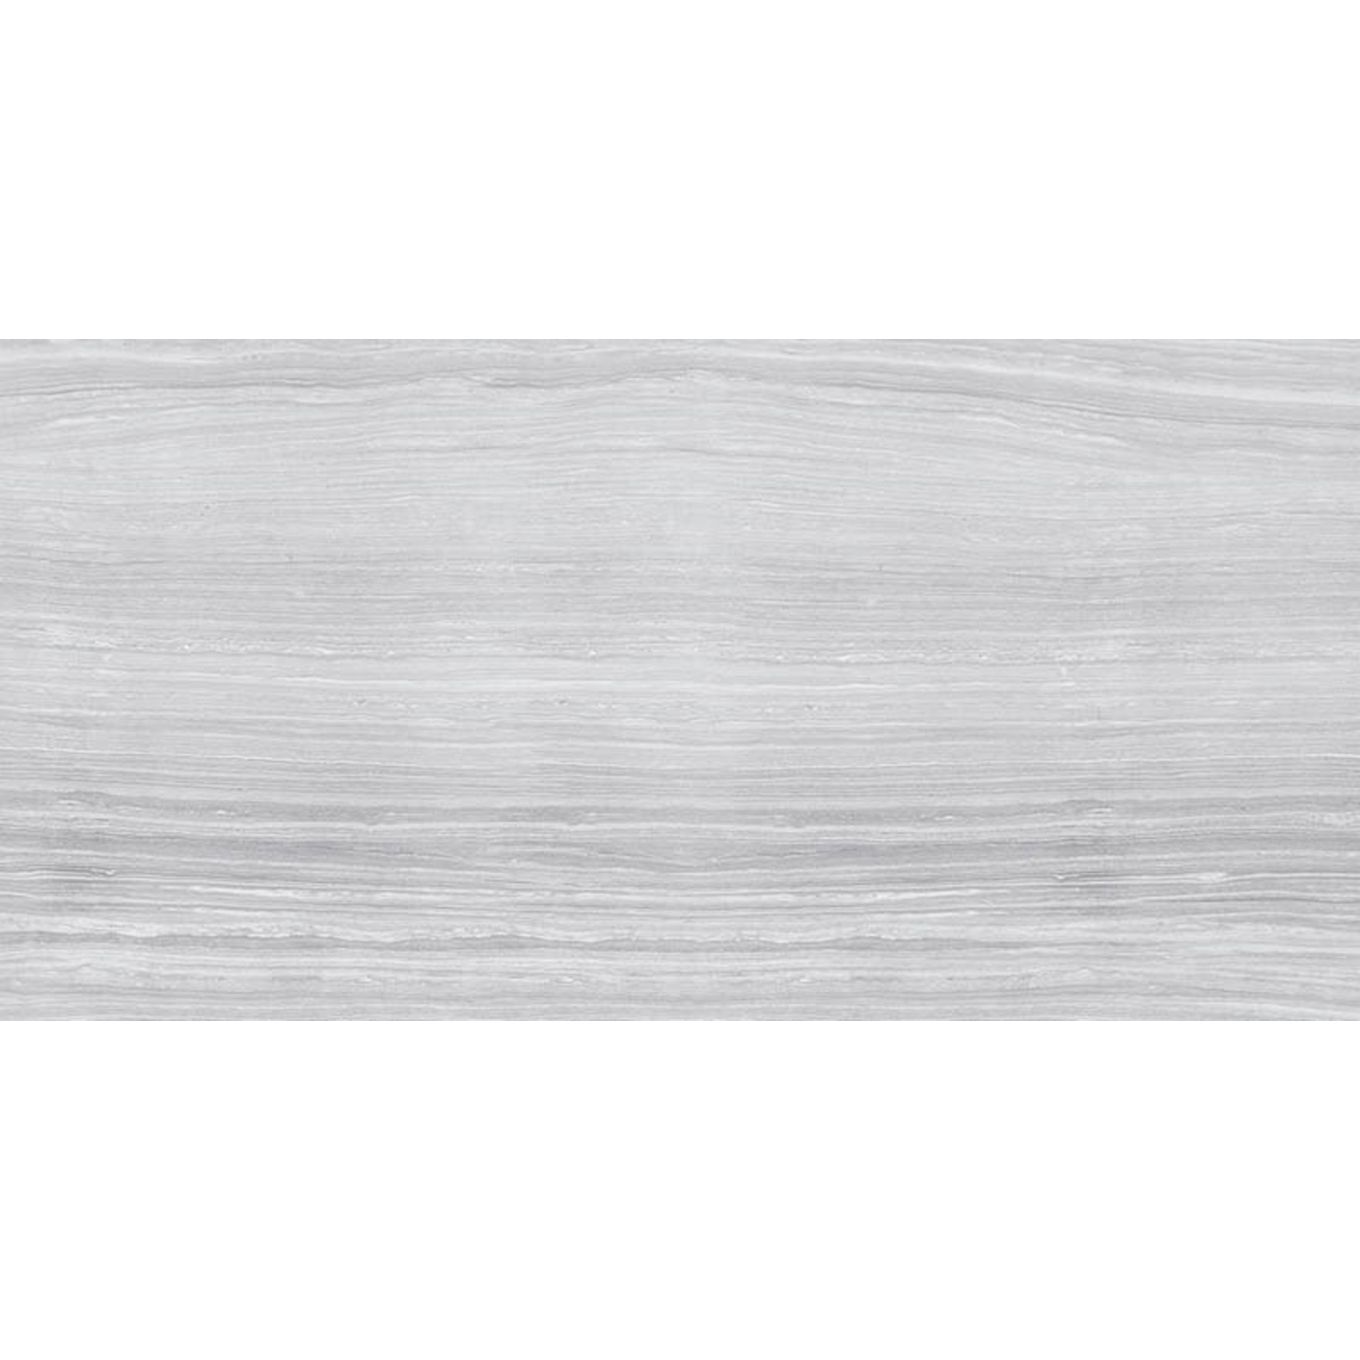 Espada Ice Rectified Matt Porcelain Tile 300 x 600mm